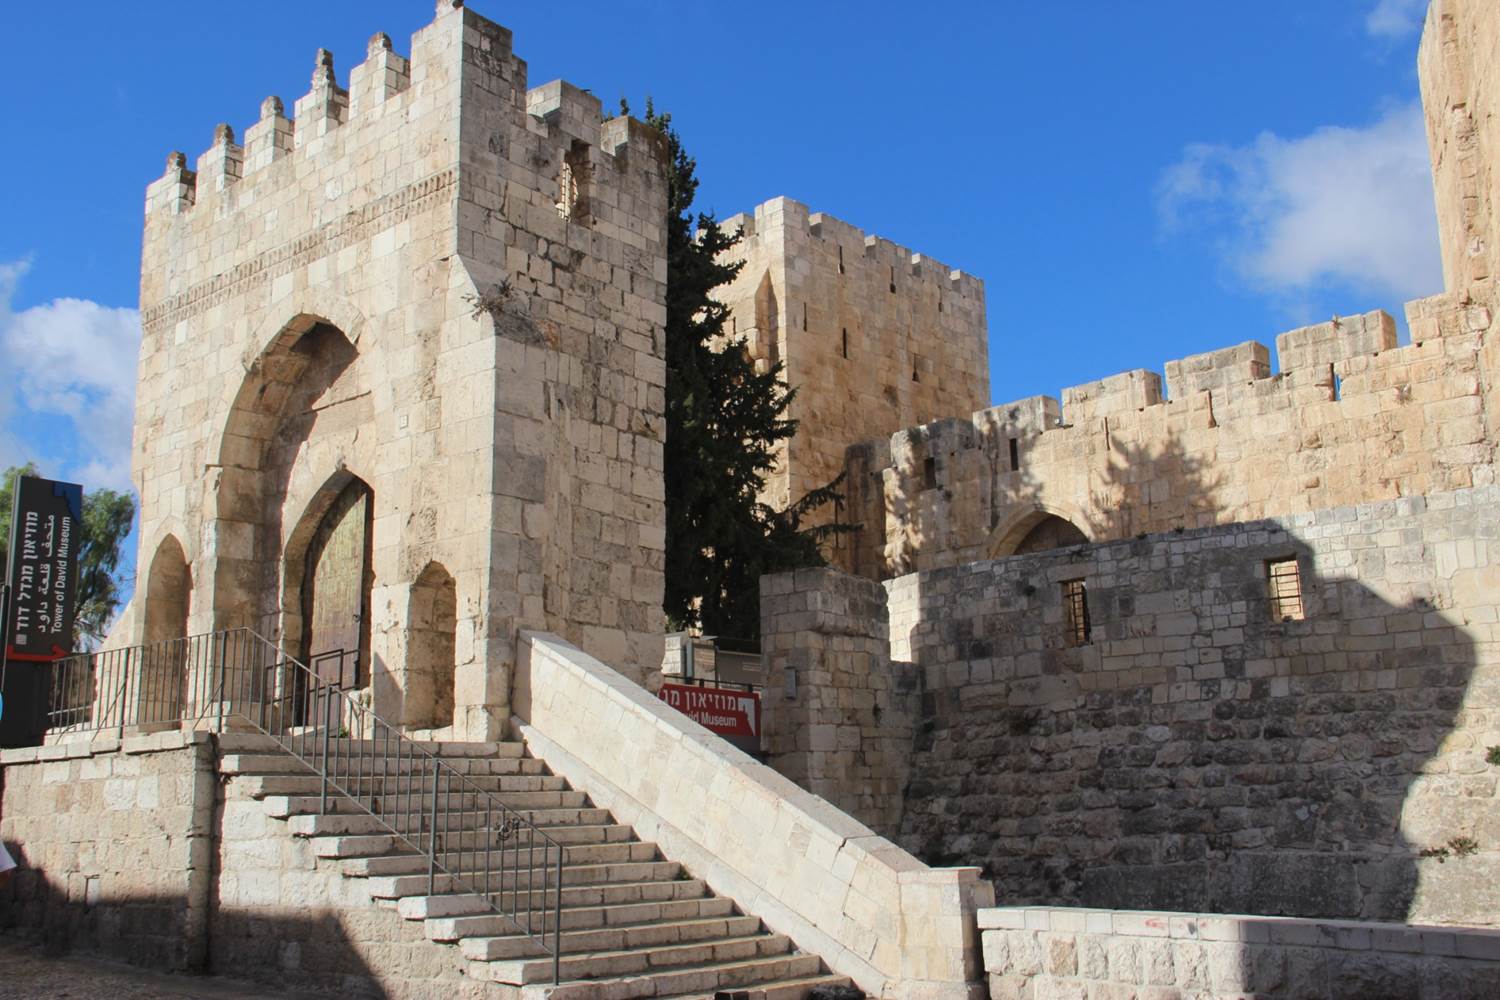 Башня давида. Цитадель Давида Иерусалим. Башня царя Давида в Иерусалиме. Крепость башня Давида Иерусалима.